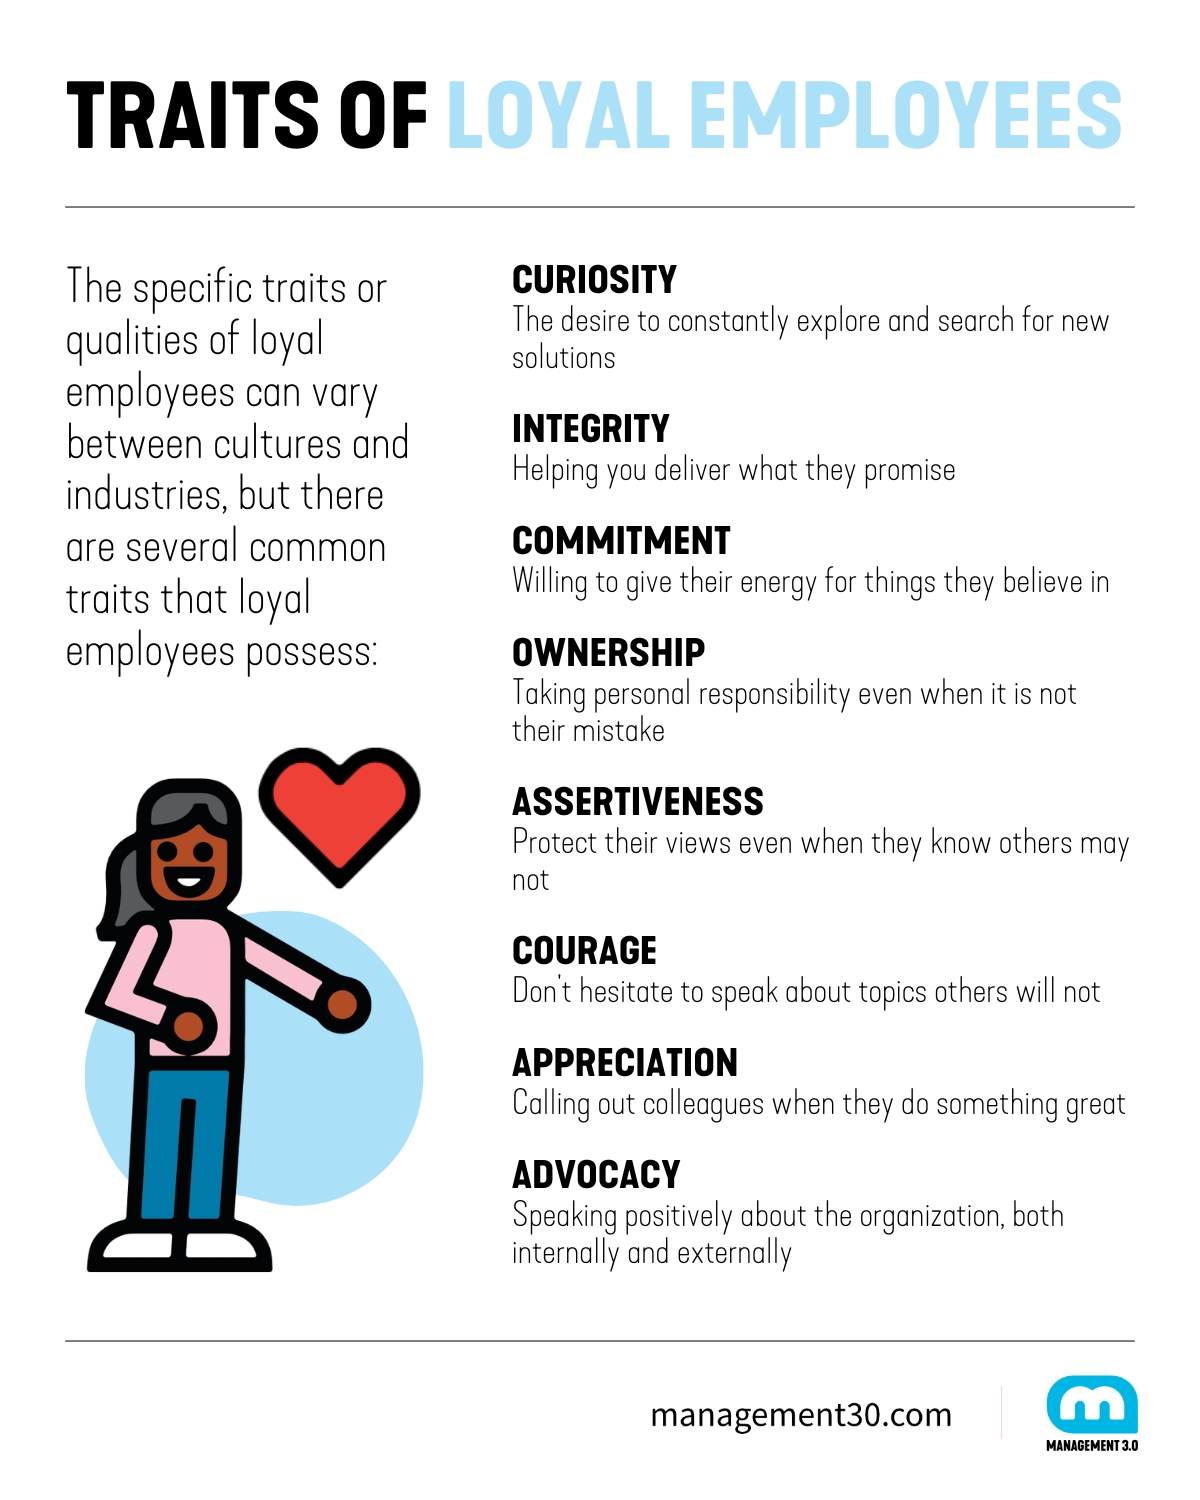 Characteristics of Loyal Employees